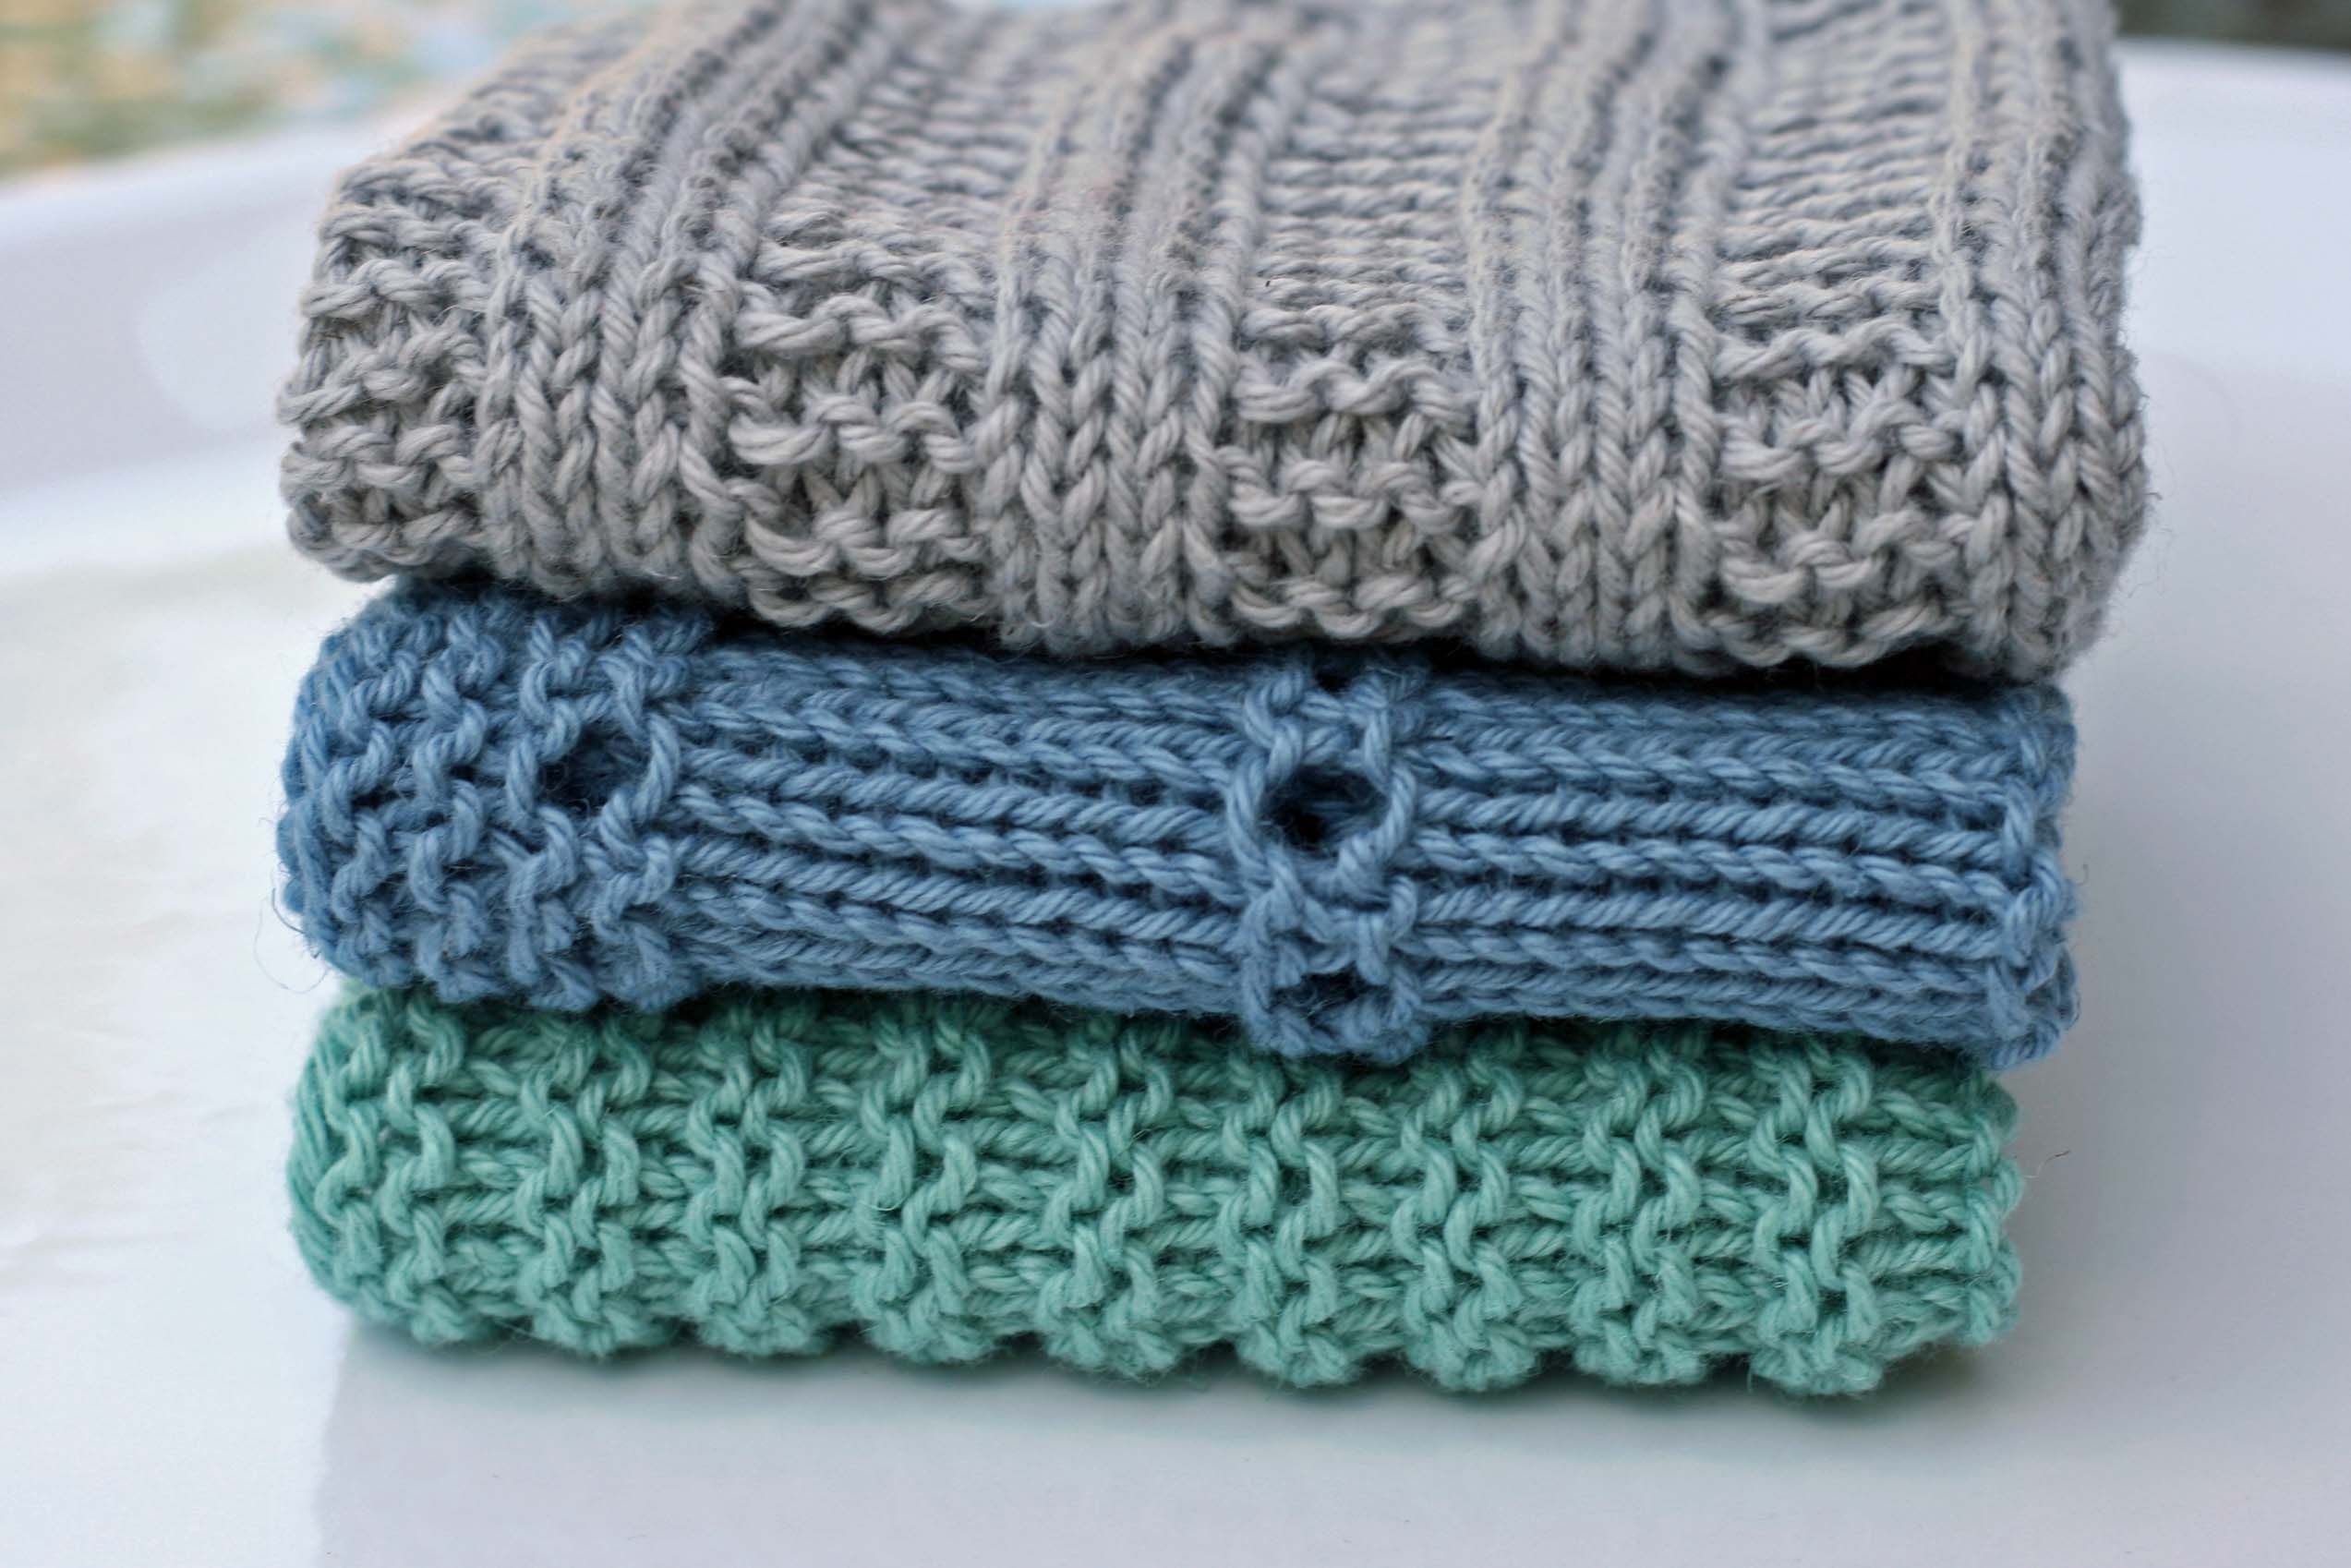 Kitchen Dishcloths # 4 - Knitting Patterns and Crochet ...